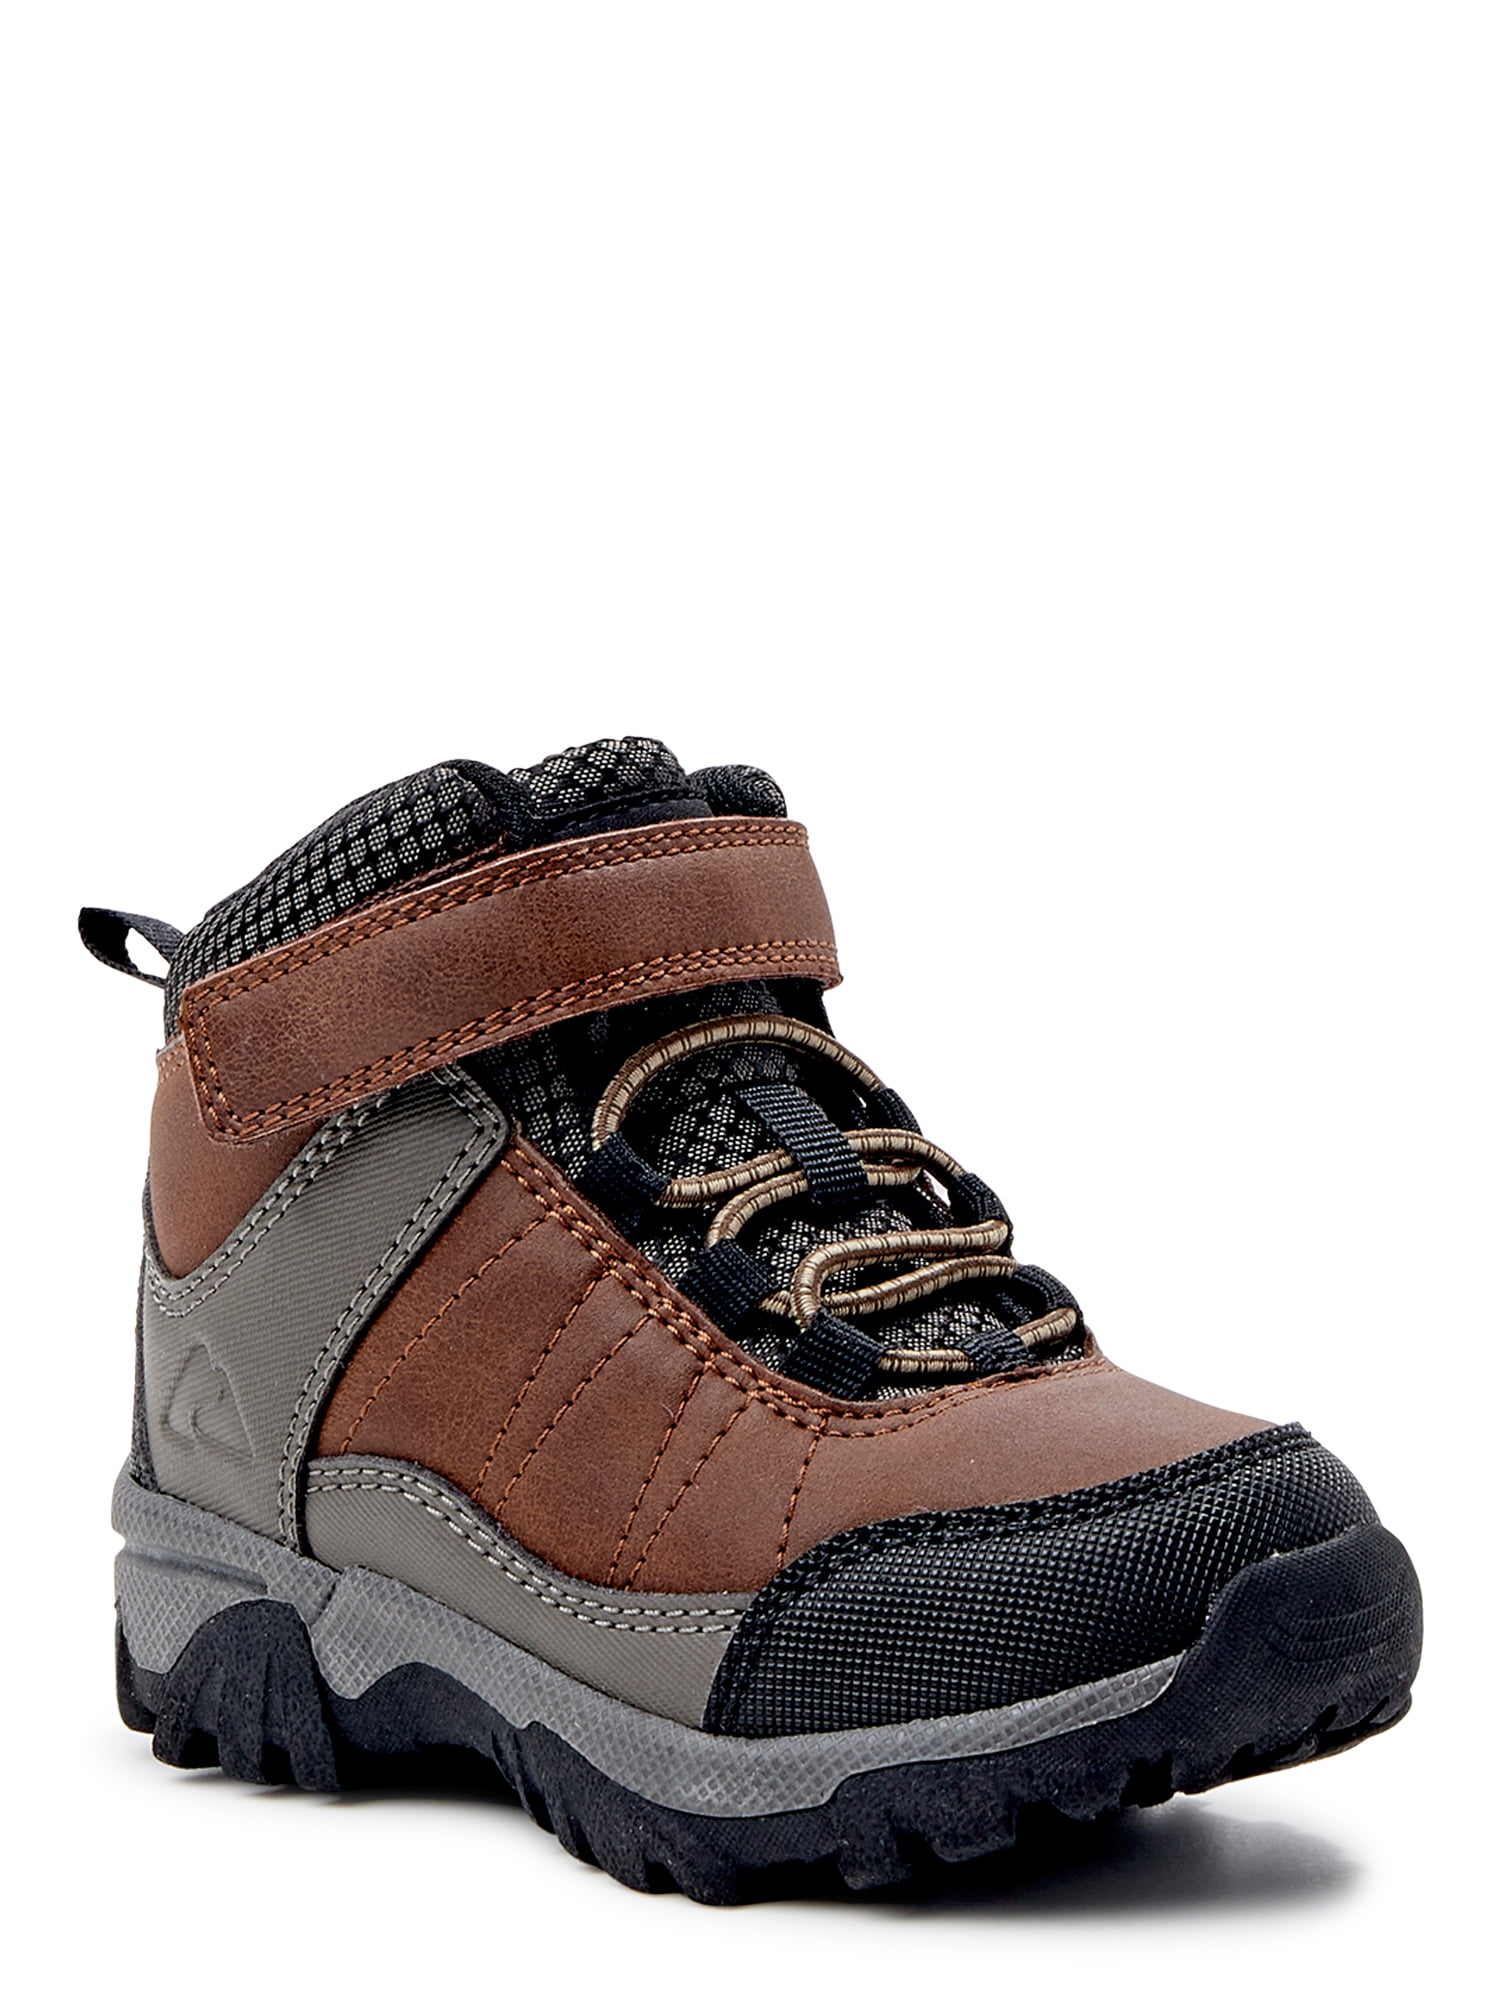 Ozark Trail Toddler Boys Hiking Boots, Sizes 7-12